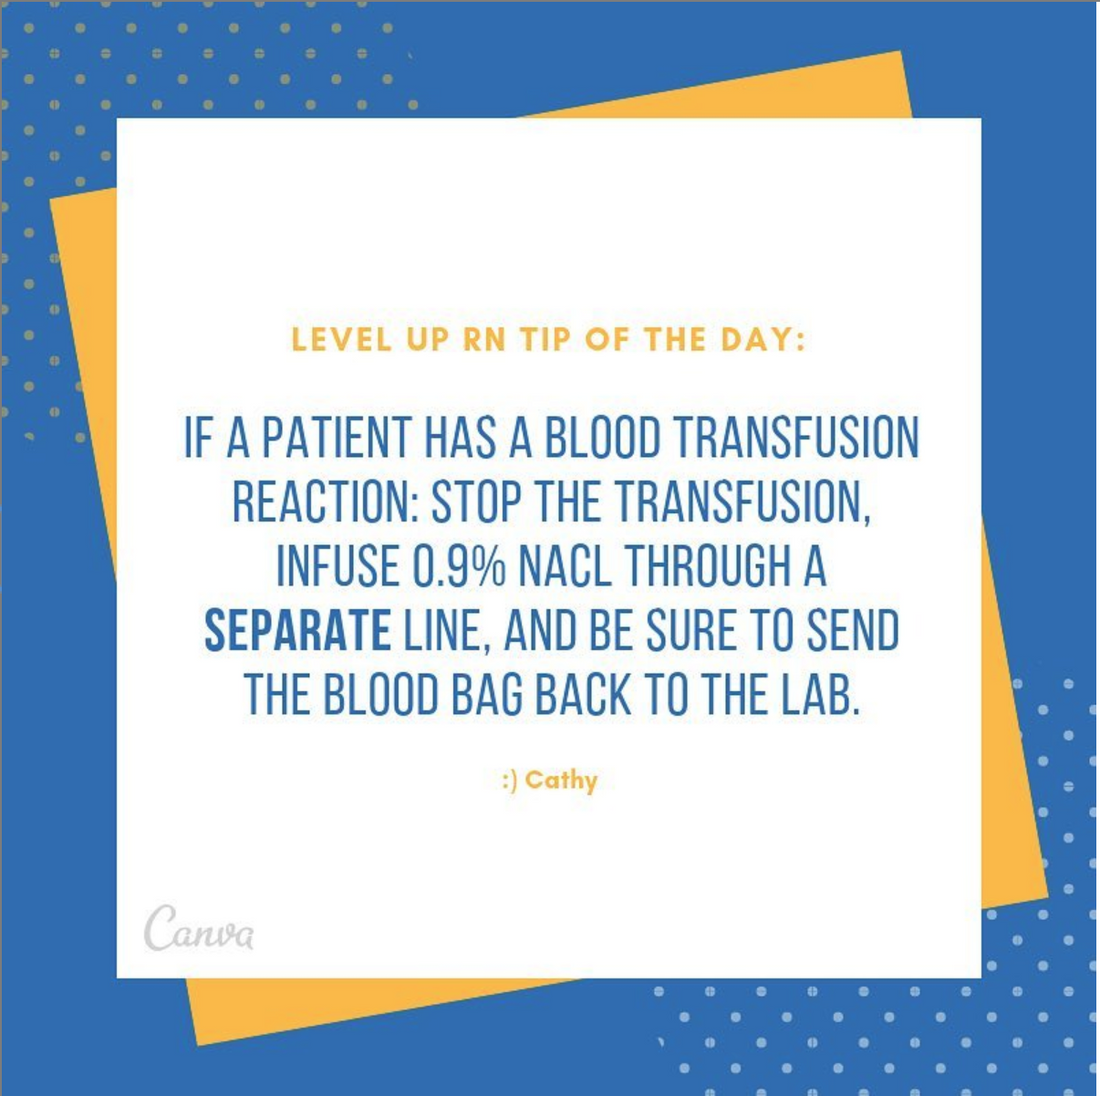 Blood transfusion reaction